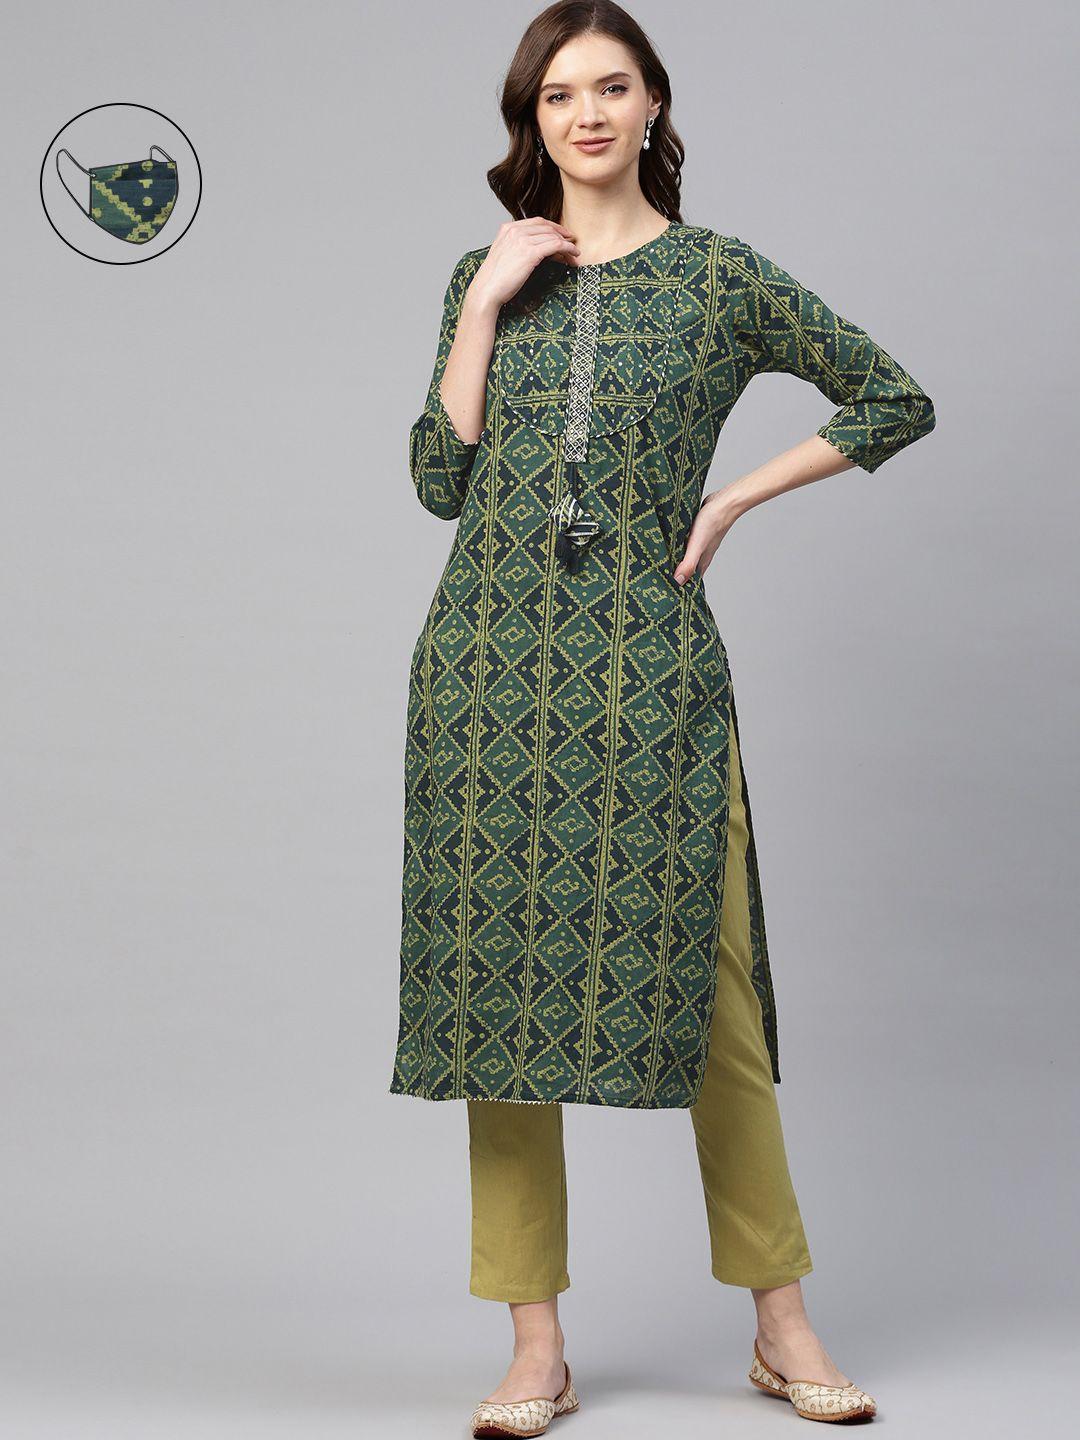 readiprint fashions women green bandhani printed kurta with trousers & face mask